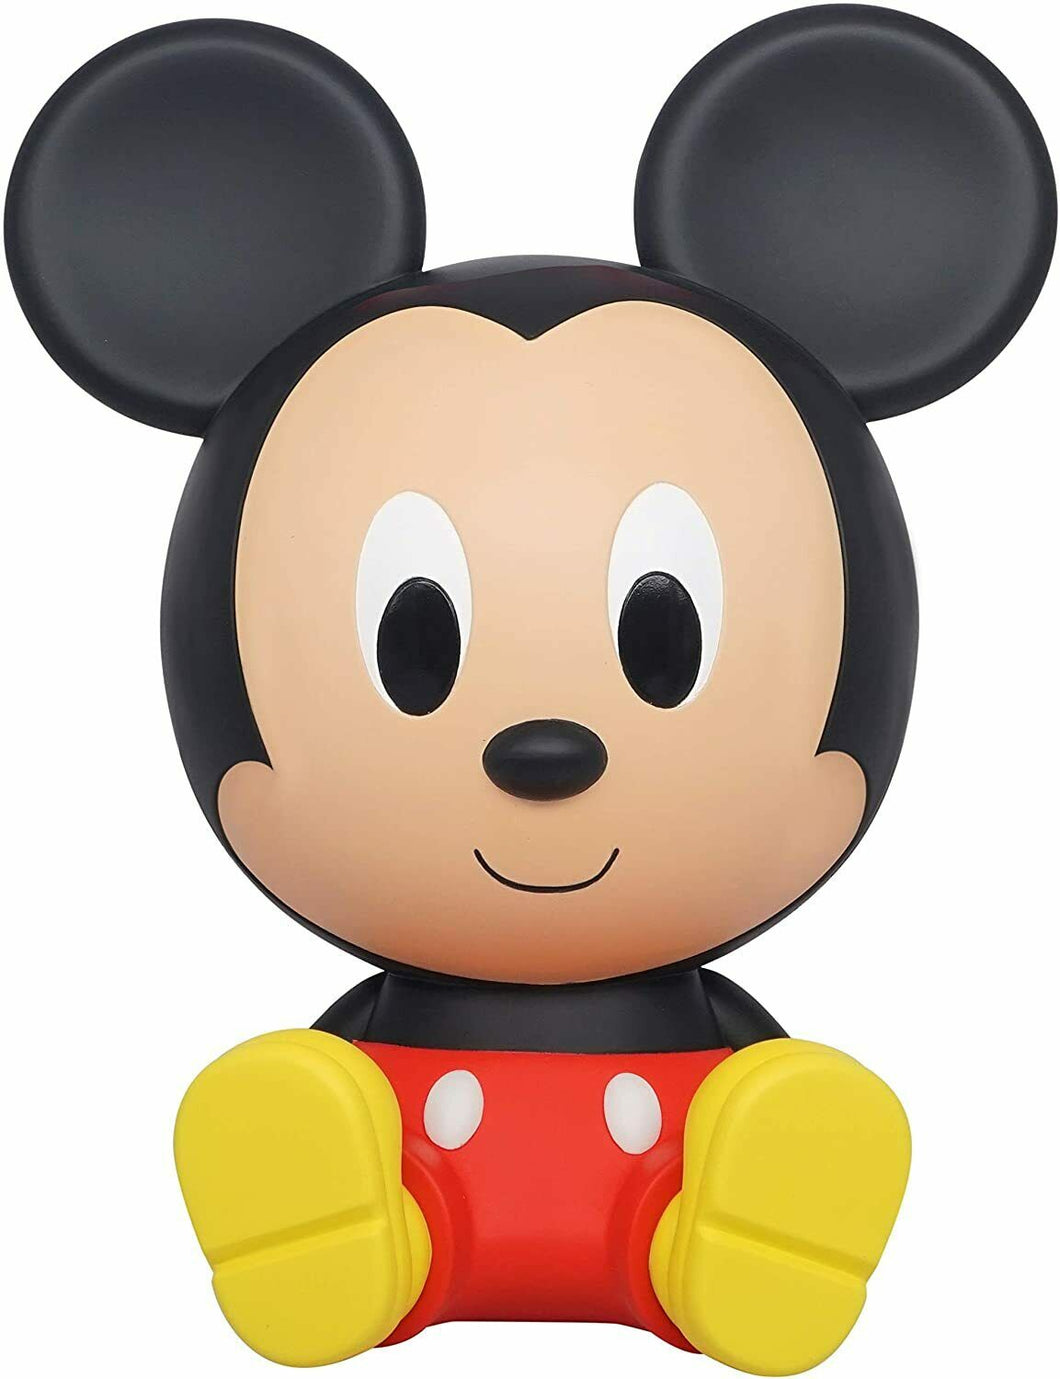 Disney Mickey Mouse Sitting PVC Figural Coin Bank - Monogram